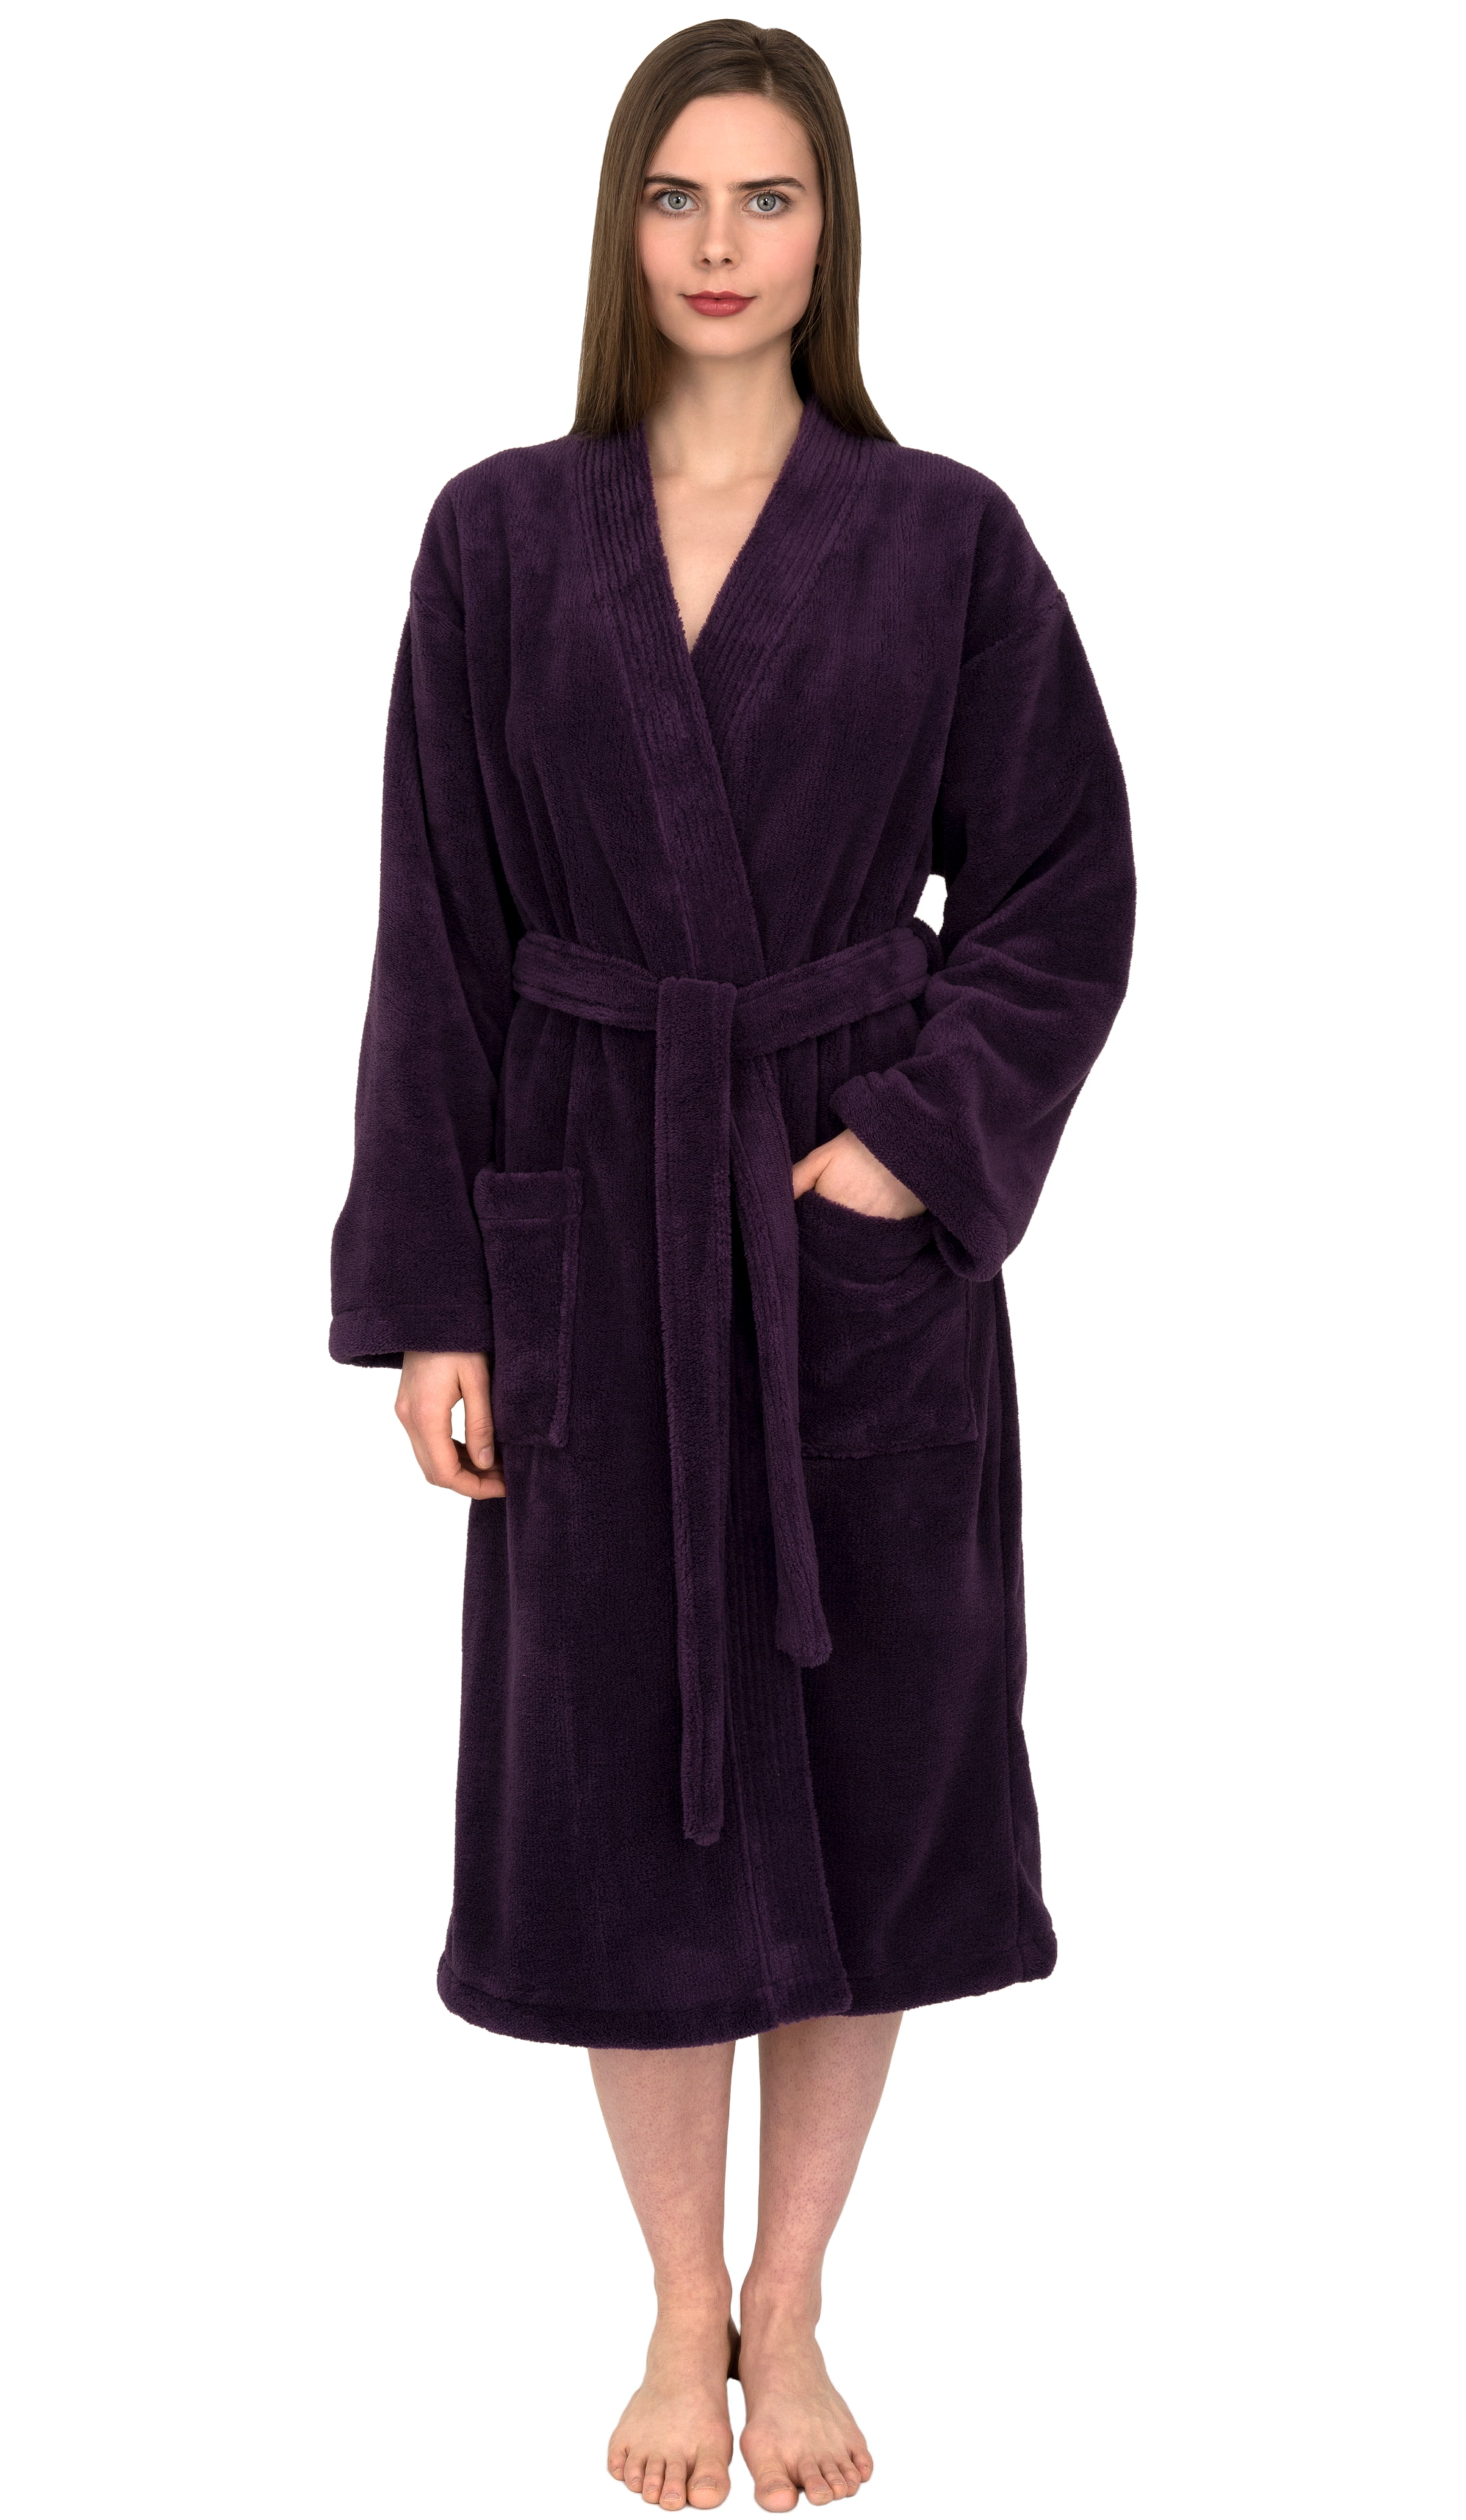 TowelSelections - TowelSelections Women's Plush Robe Soft Fleece Kimono ...